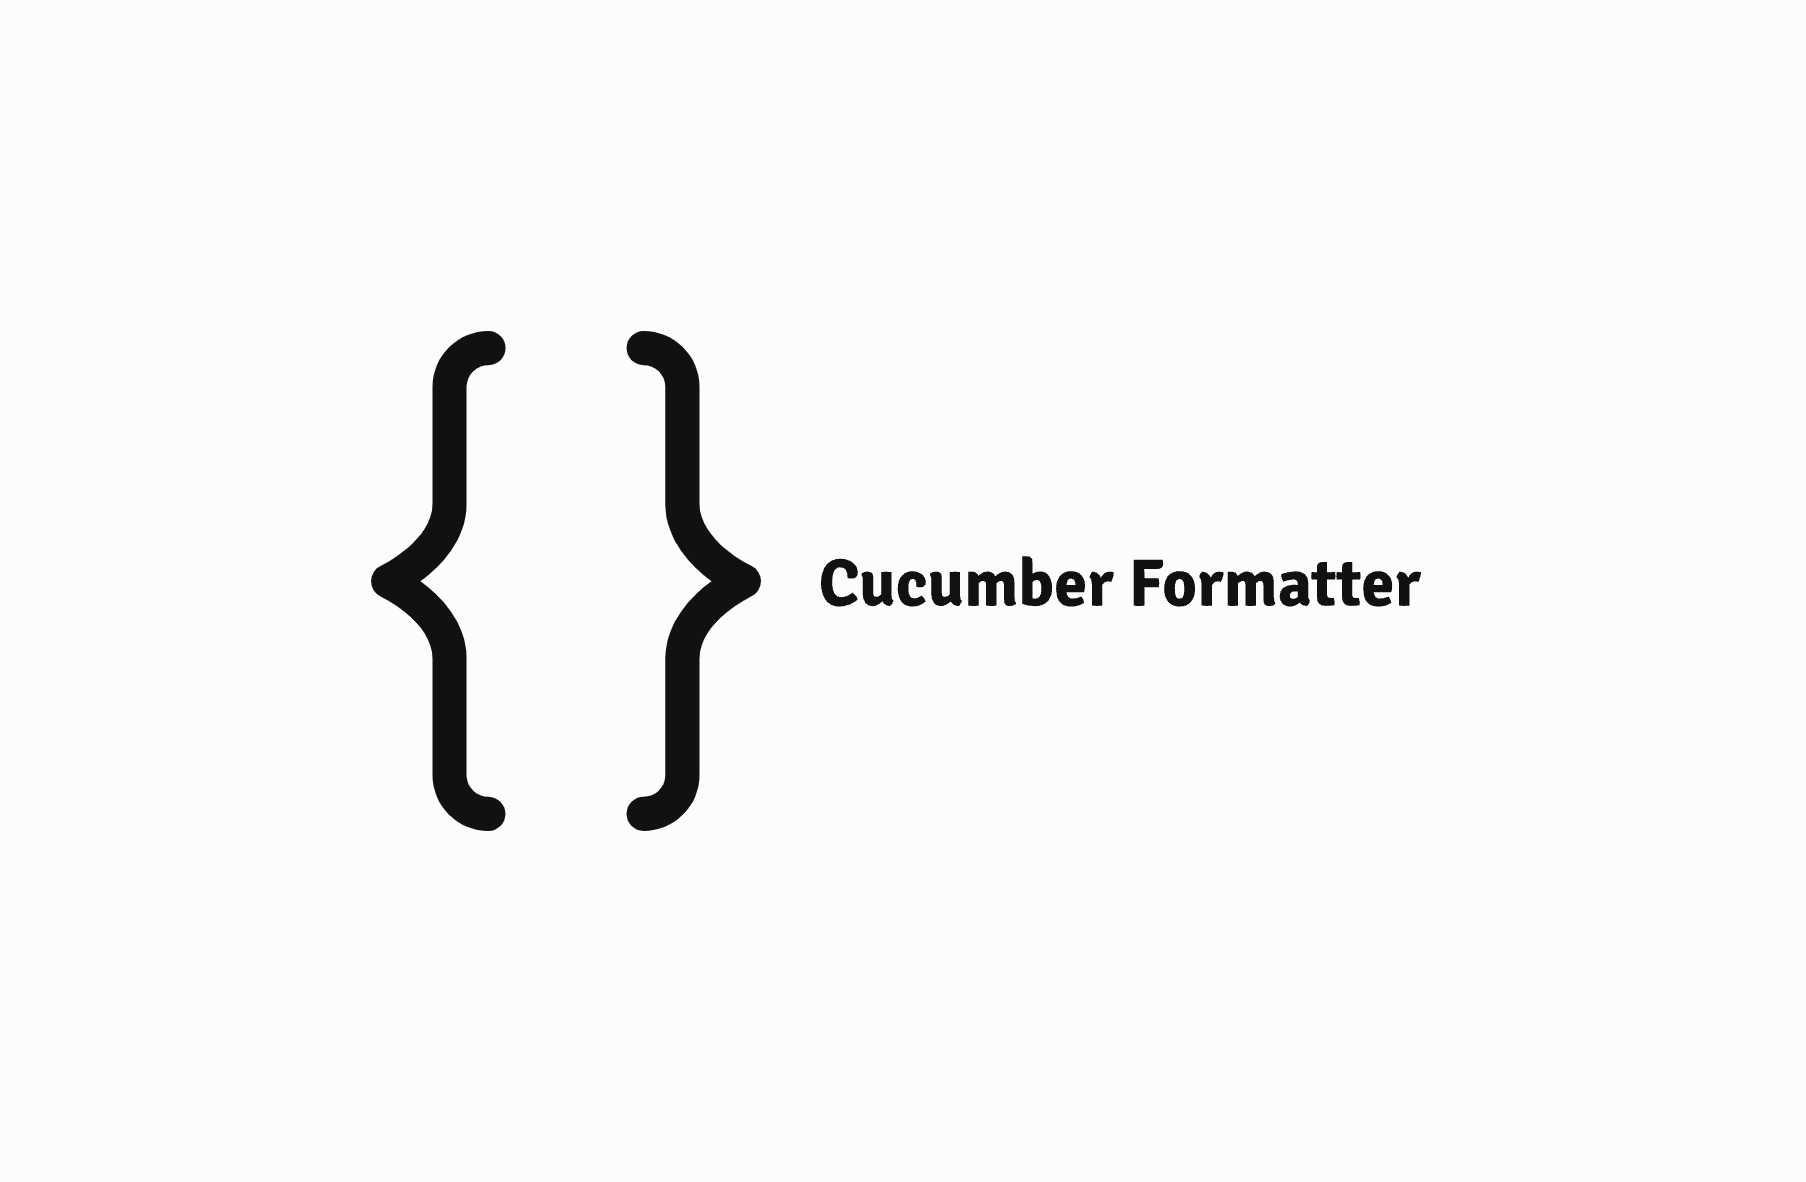 Cucumber Formatter